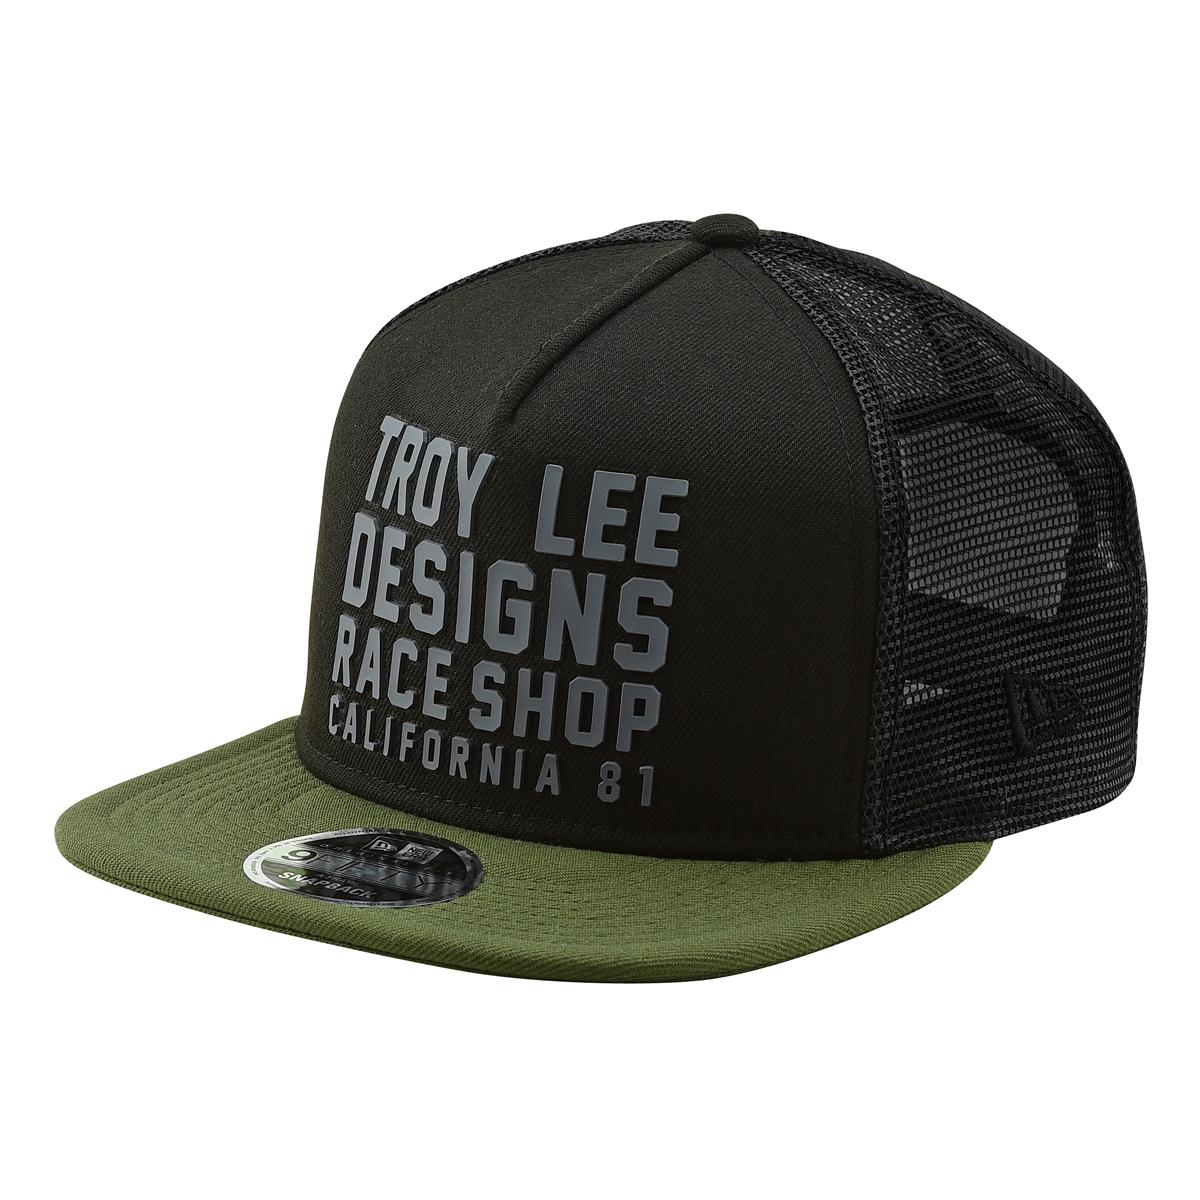 Troy Lee Designs Snapback Cap RC Cali Schwarz/Rifle Green